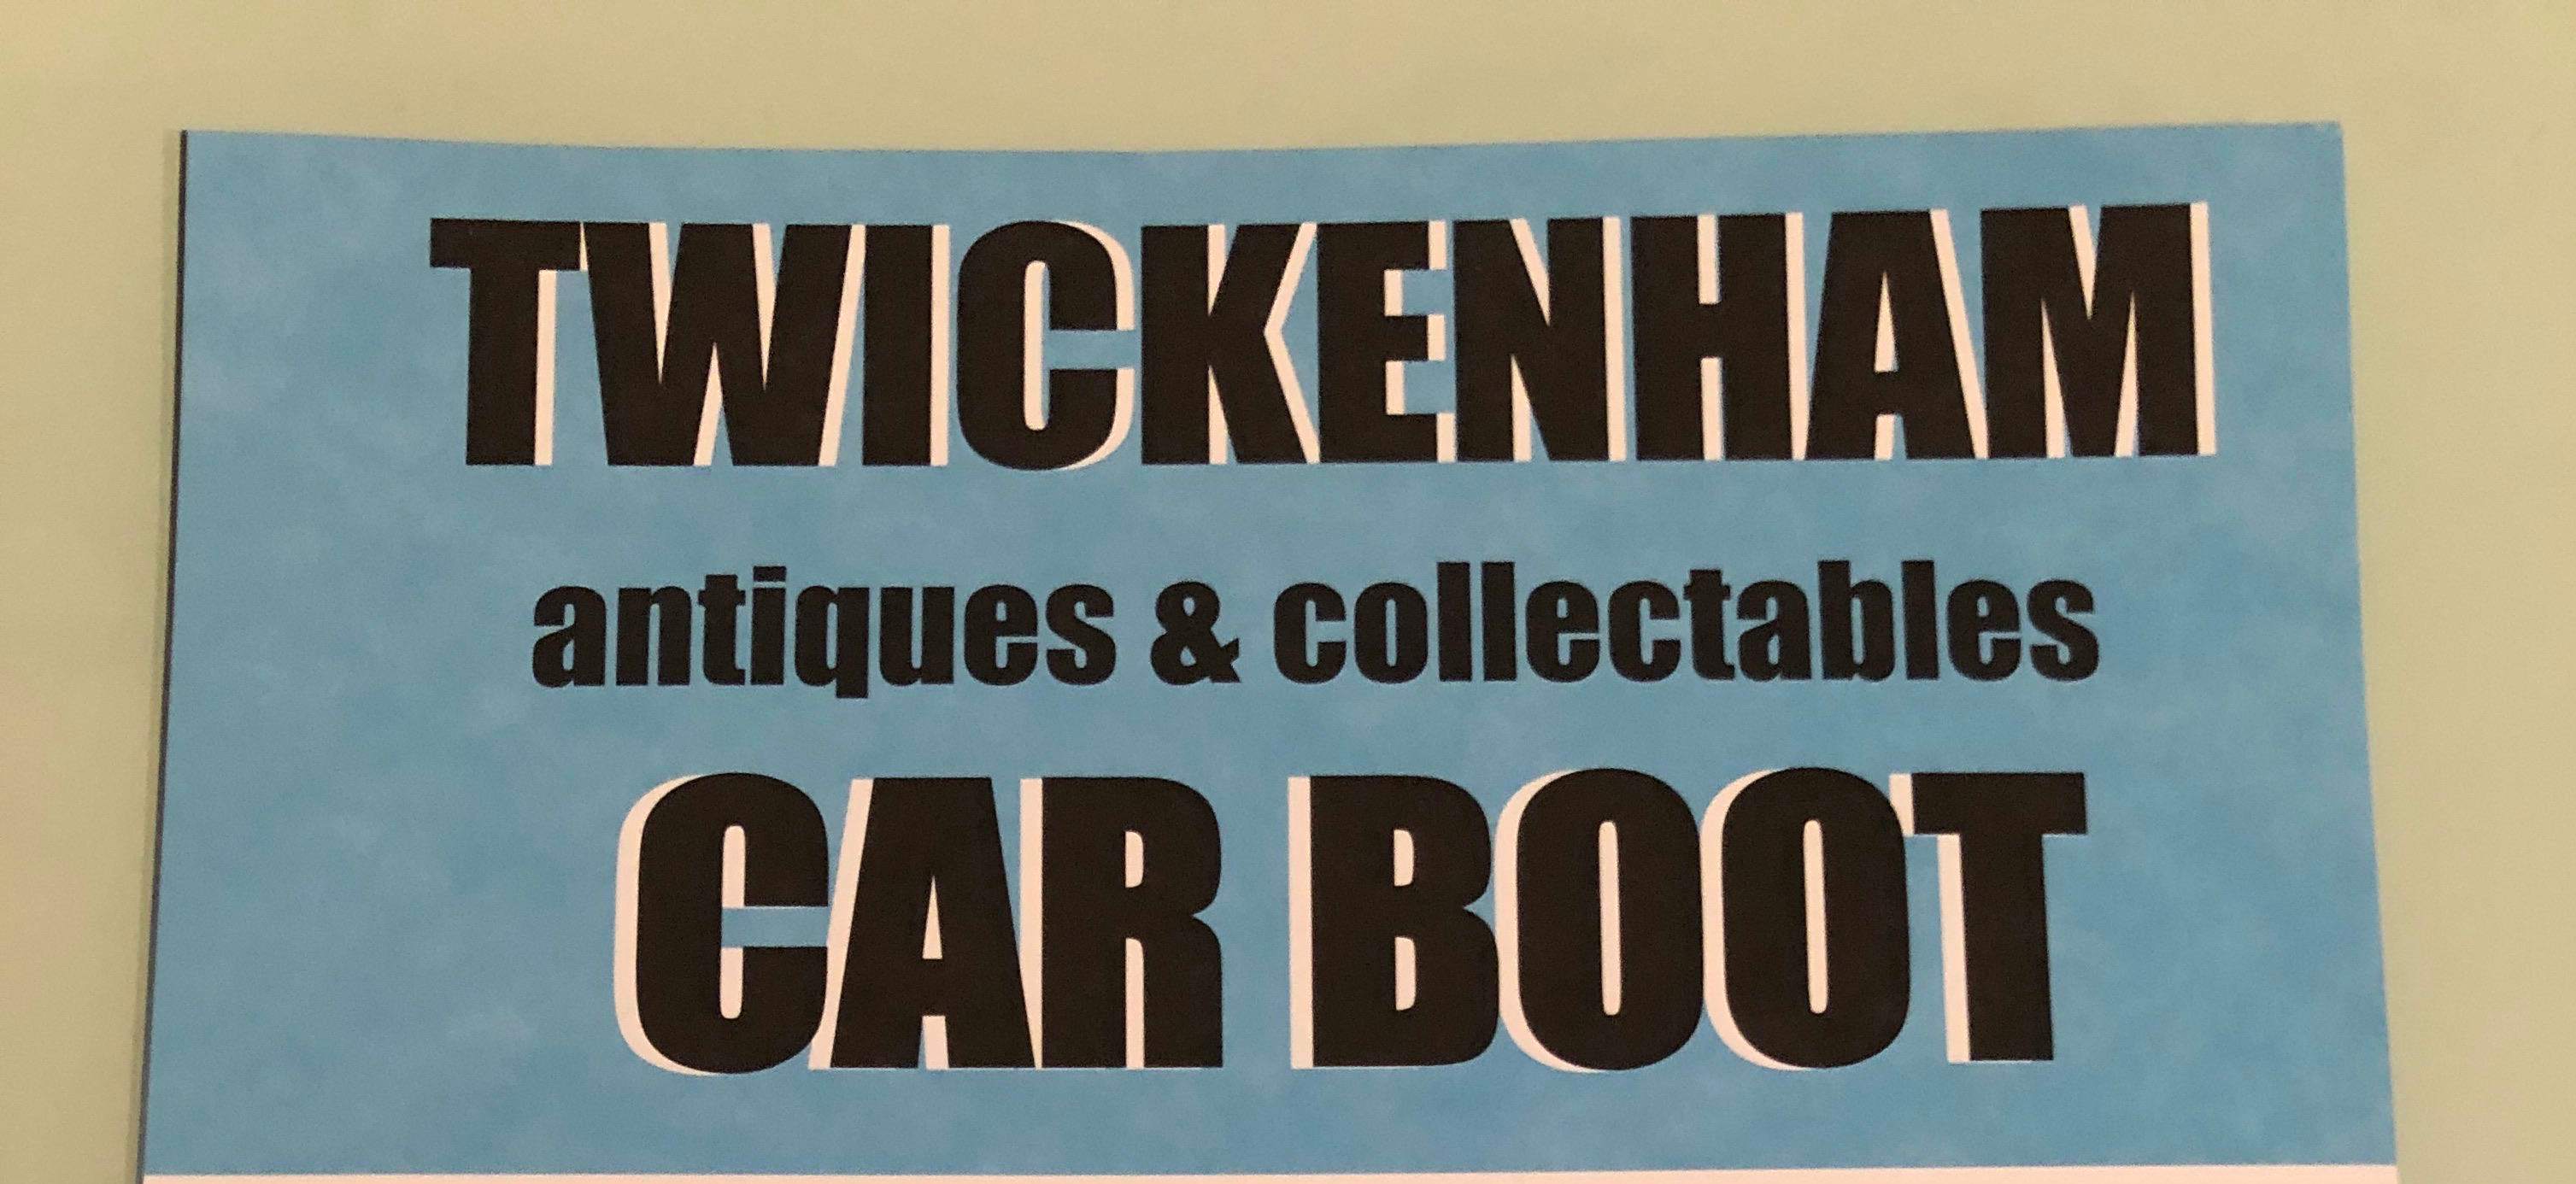 Twickenham Car Boot